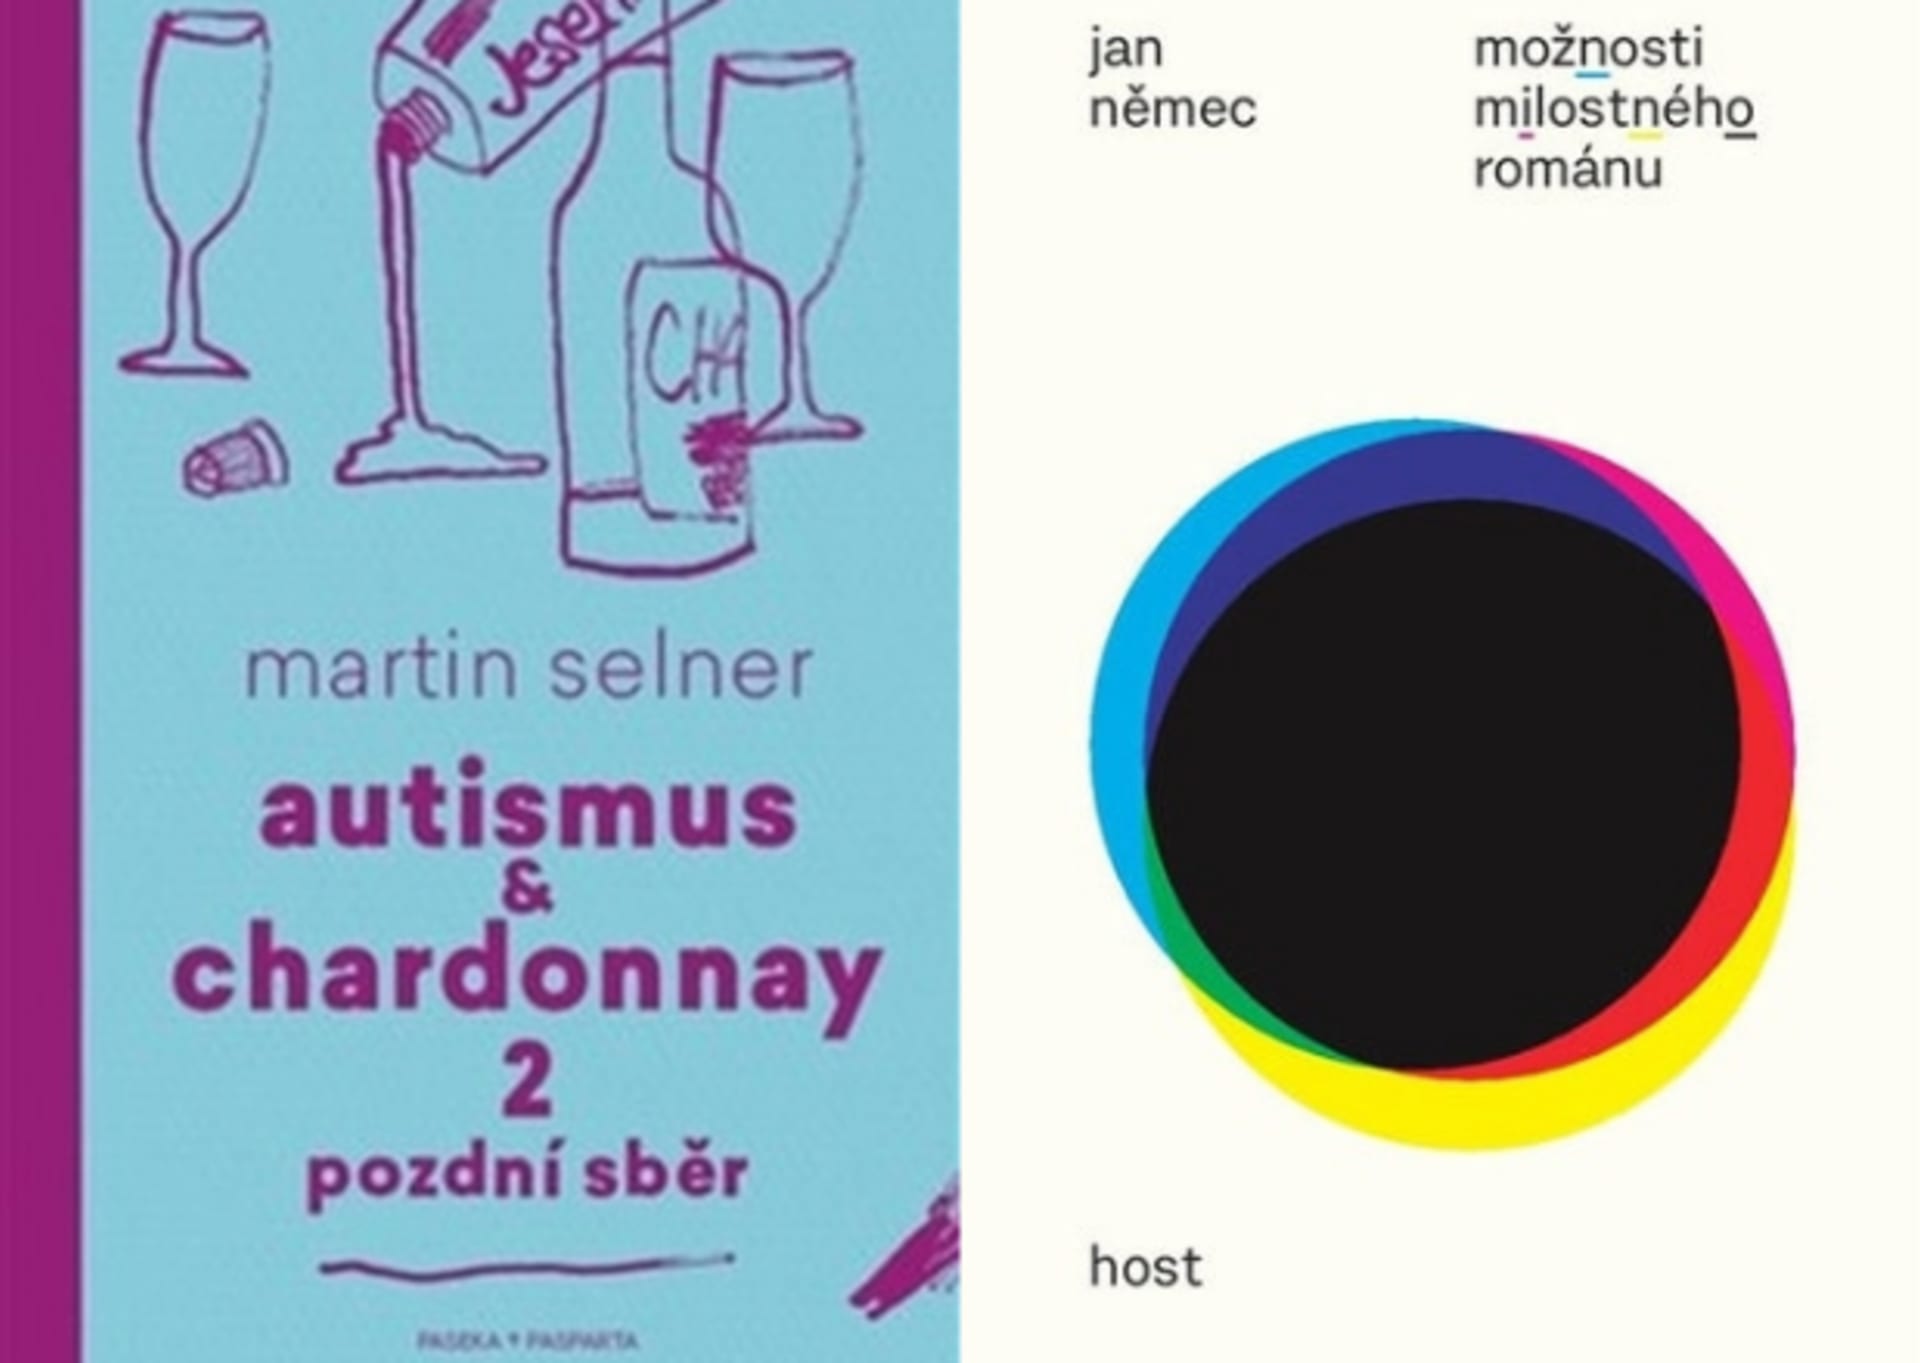 Autismus & Chardonnay 2, Možnosti milostného románu